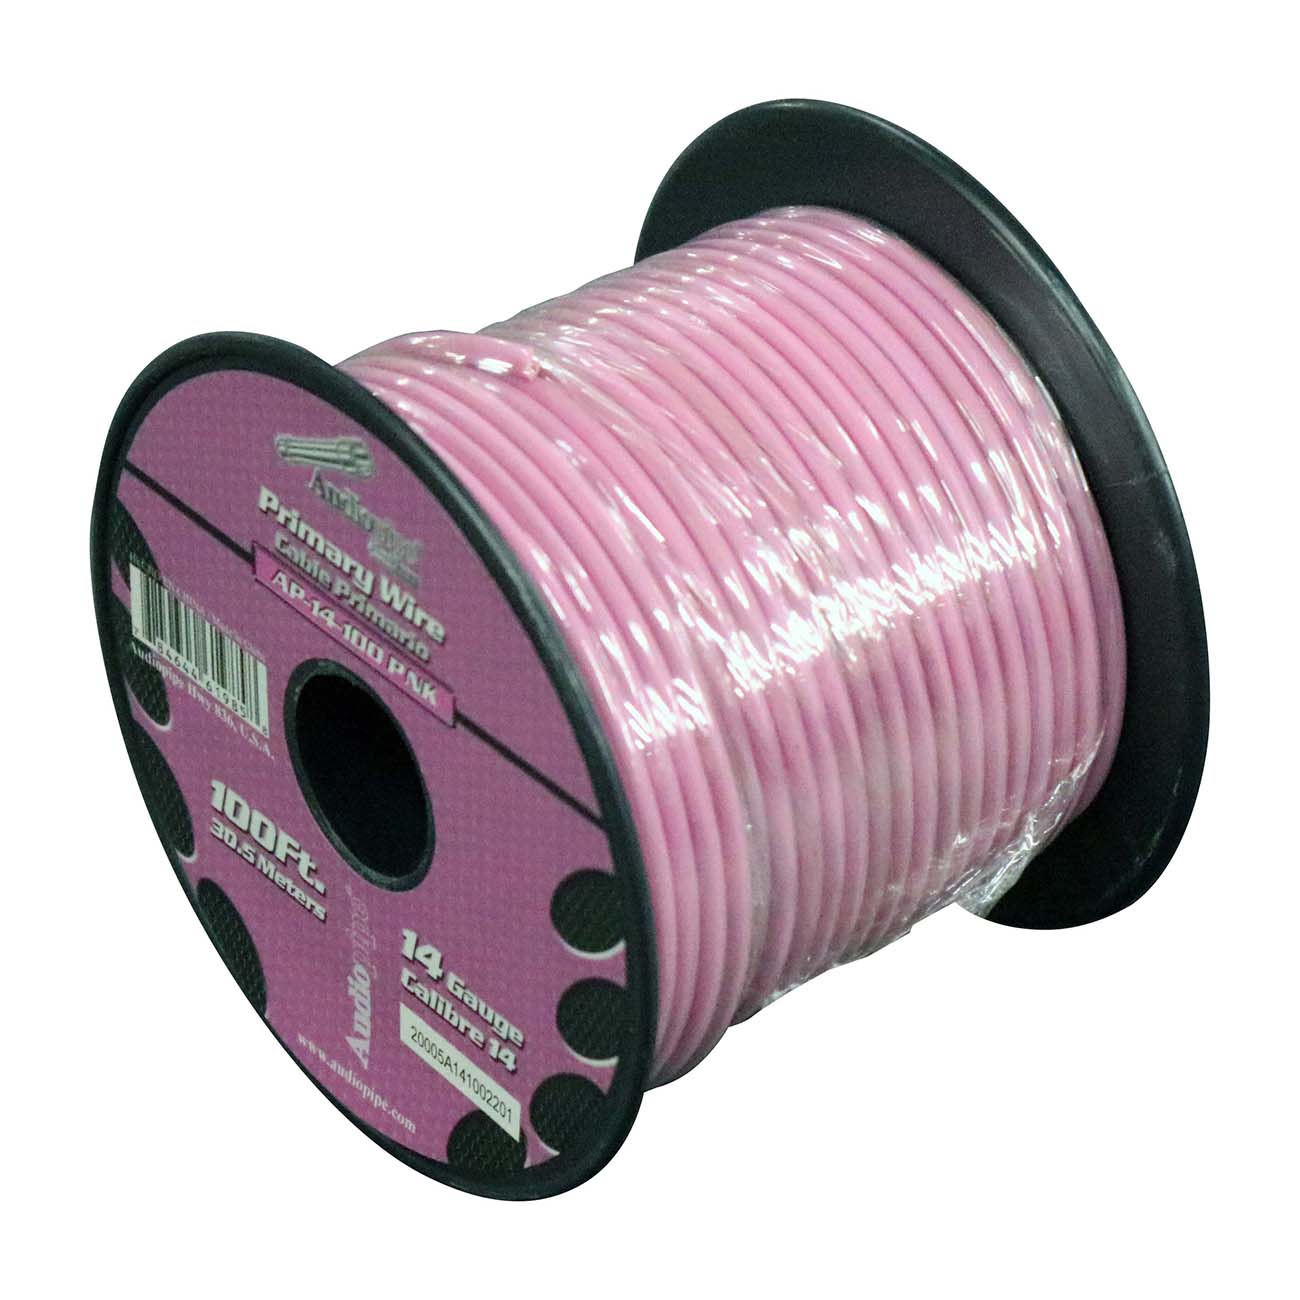 Audiopipe 14 Gauge 100ft Primary Wire Pink